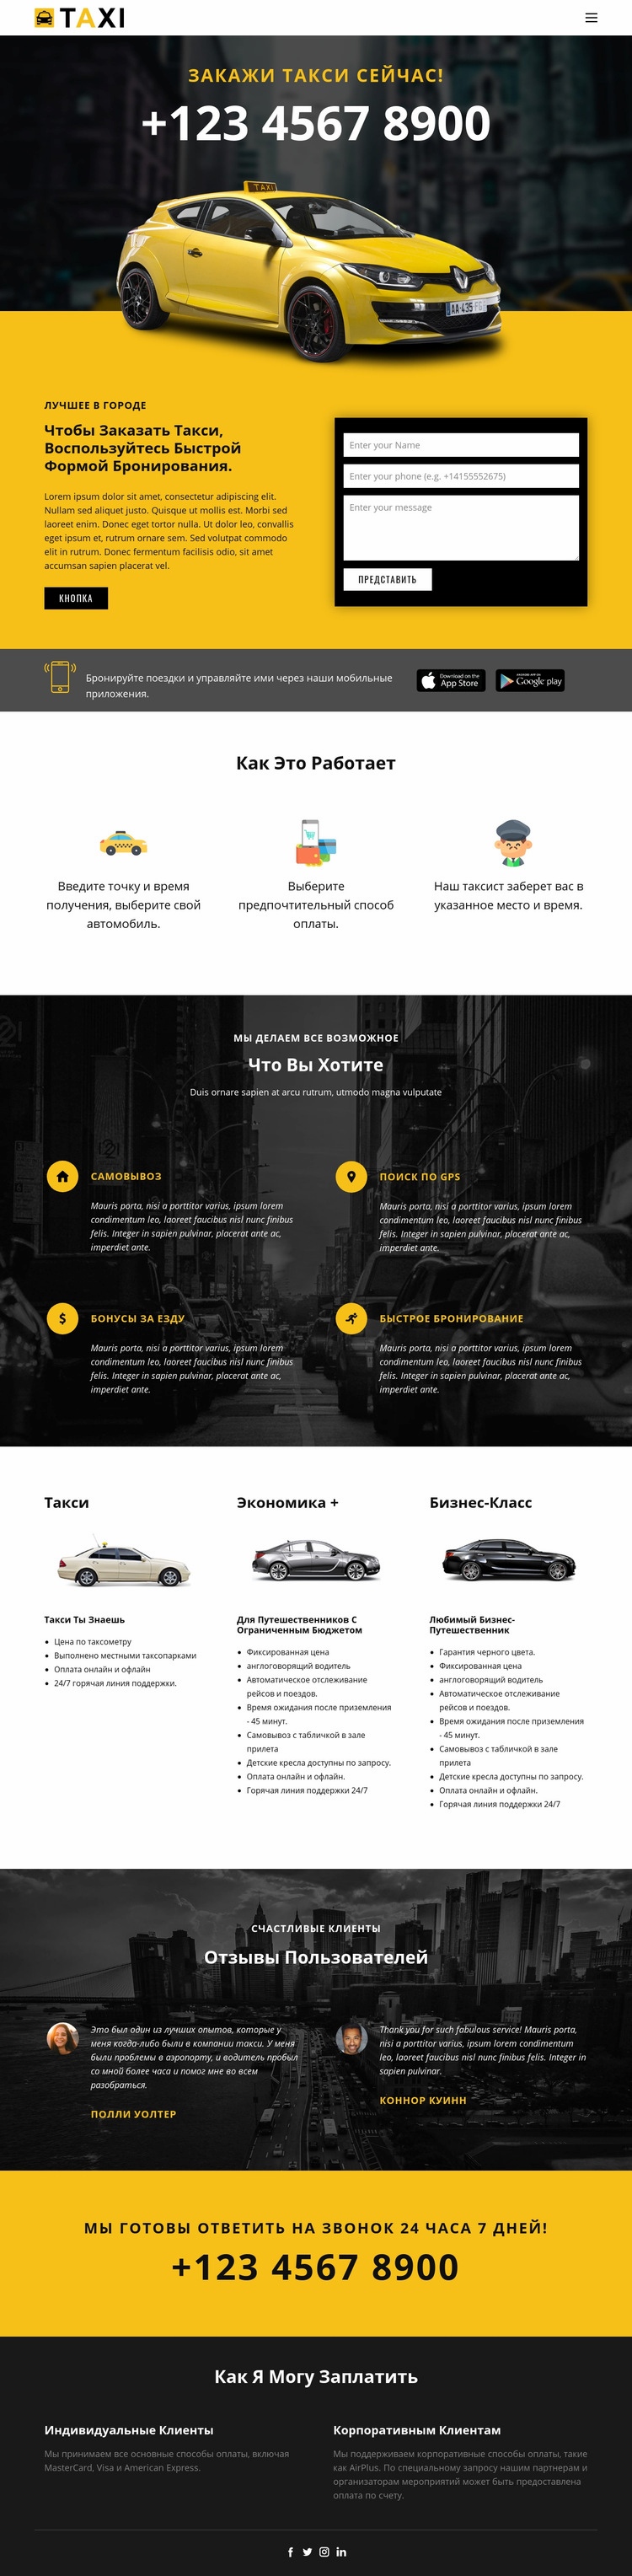 Самые быстрые машины такси Шаблон веб-сайта